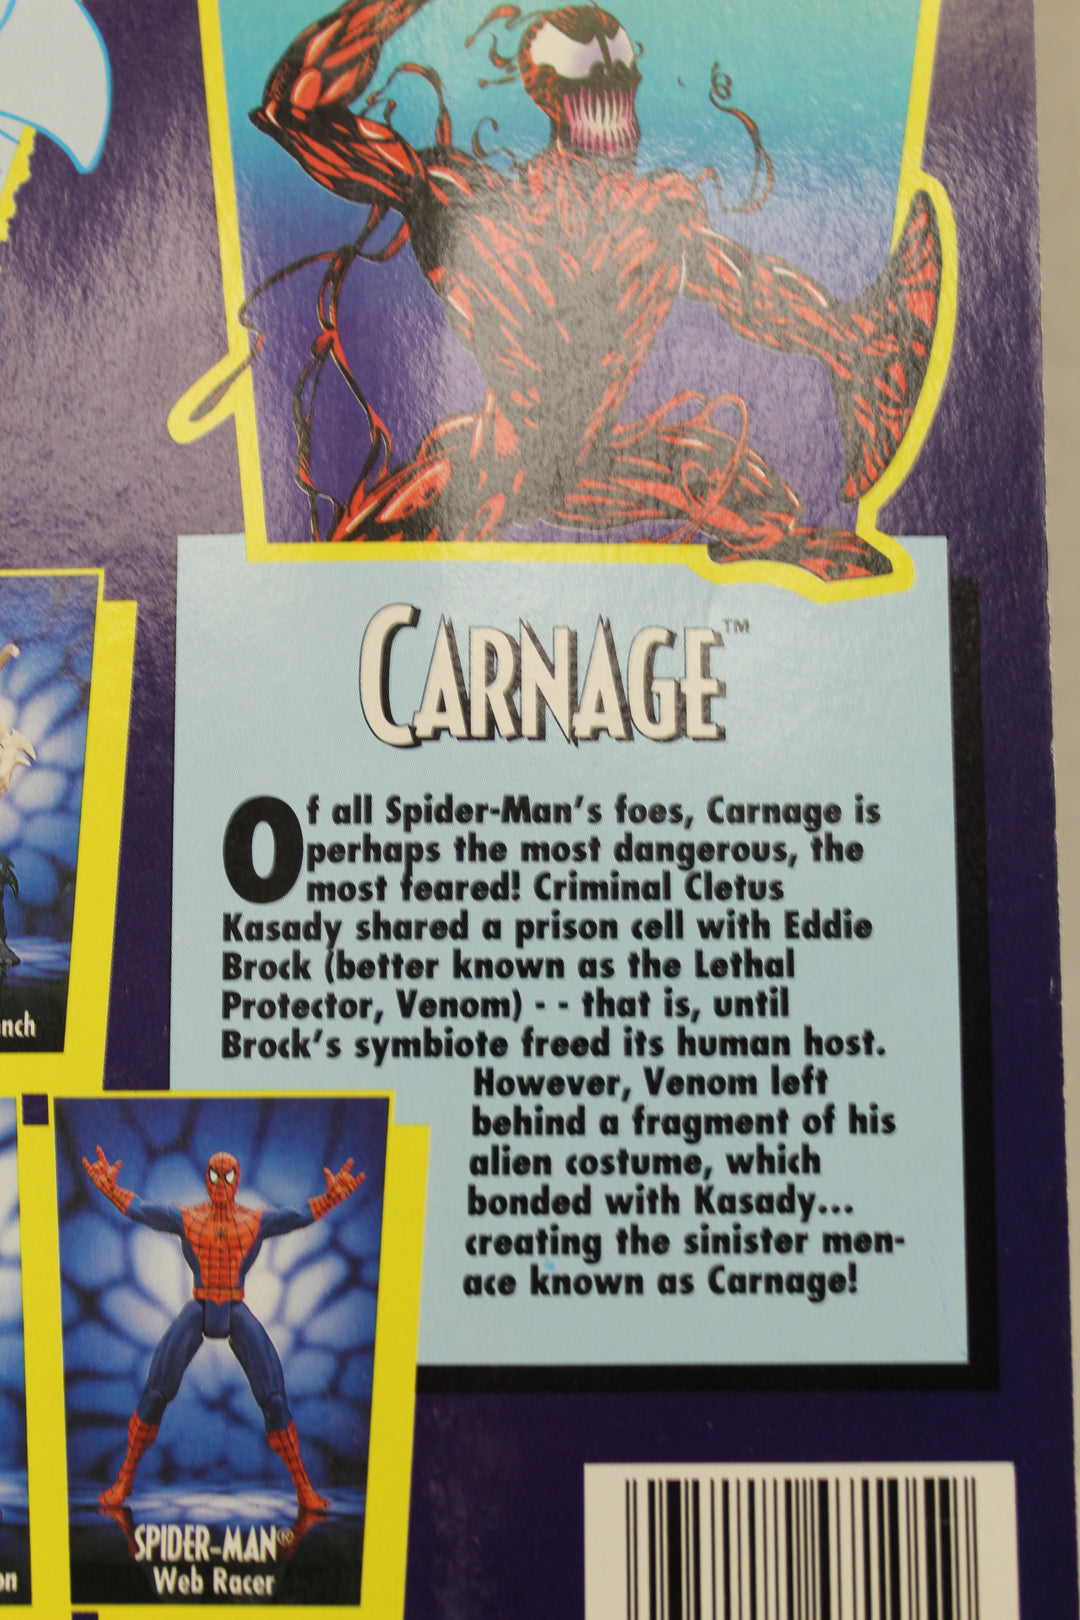 Spider-Man TAS Carnage 1994